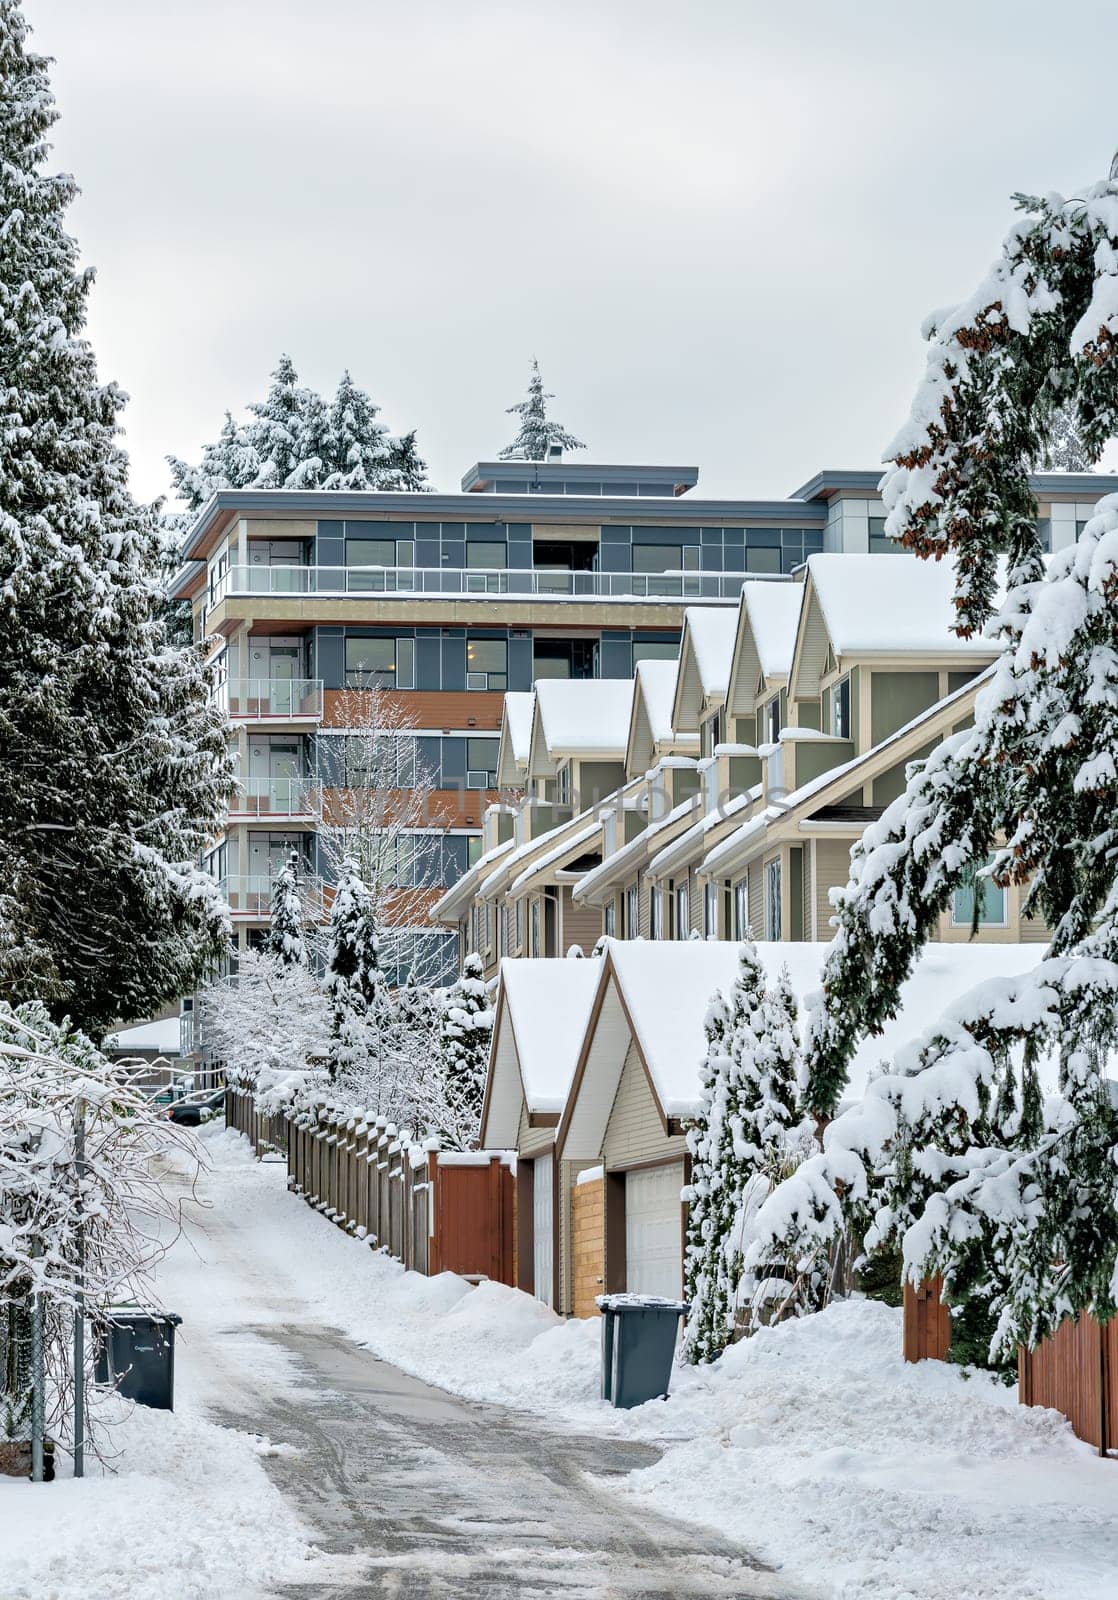 Back street of residential townhouses on winter season by Imagenet